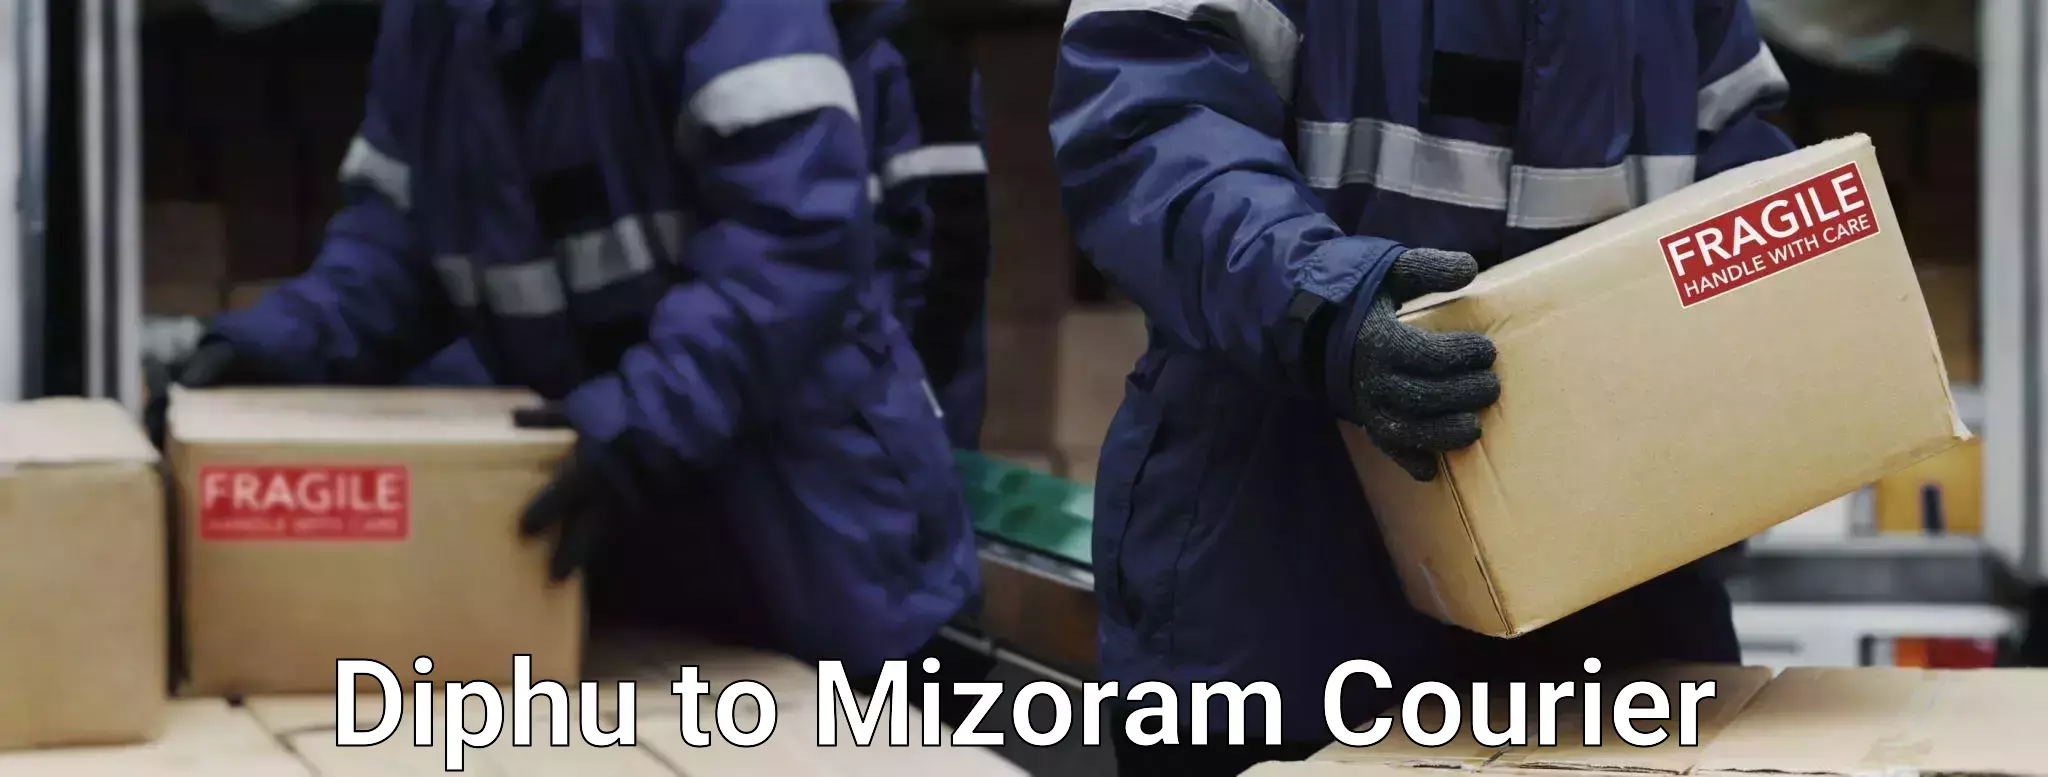 Luggage delivery optimization Diphu to Mizoram